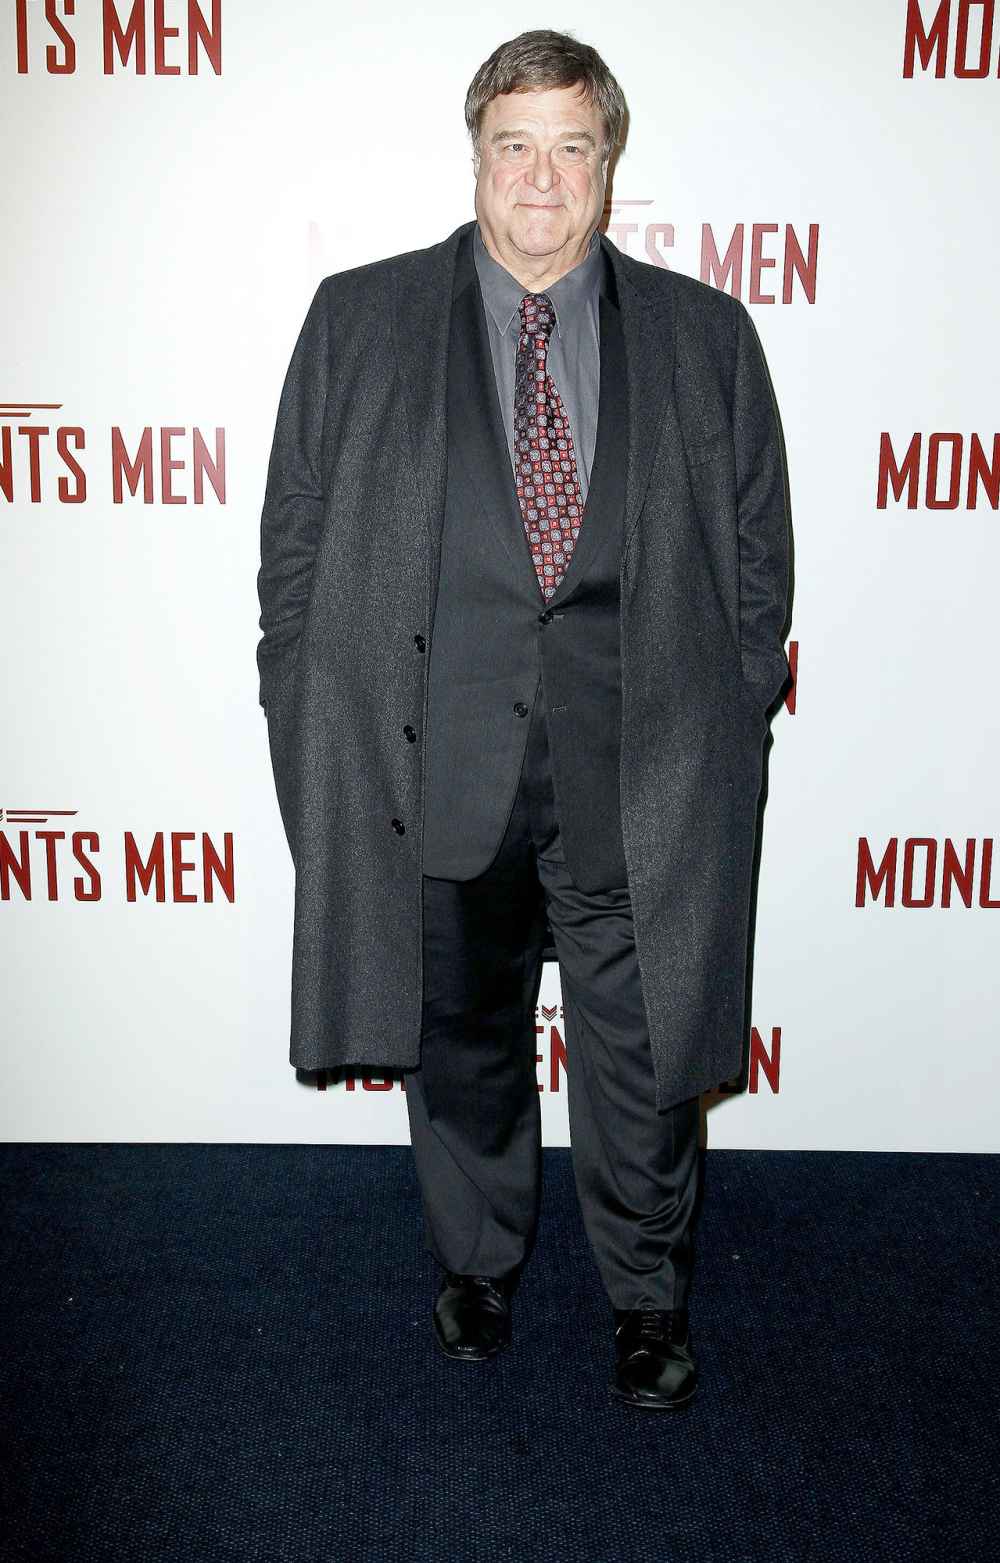 John Goodman attends 'Monuments Men' Paris premiere at Cinema UGC Normandie on February 12, 2014 in Paris, France. (